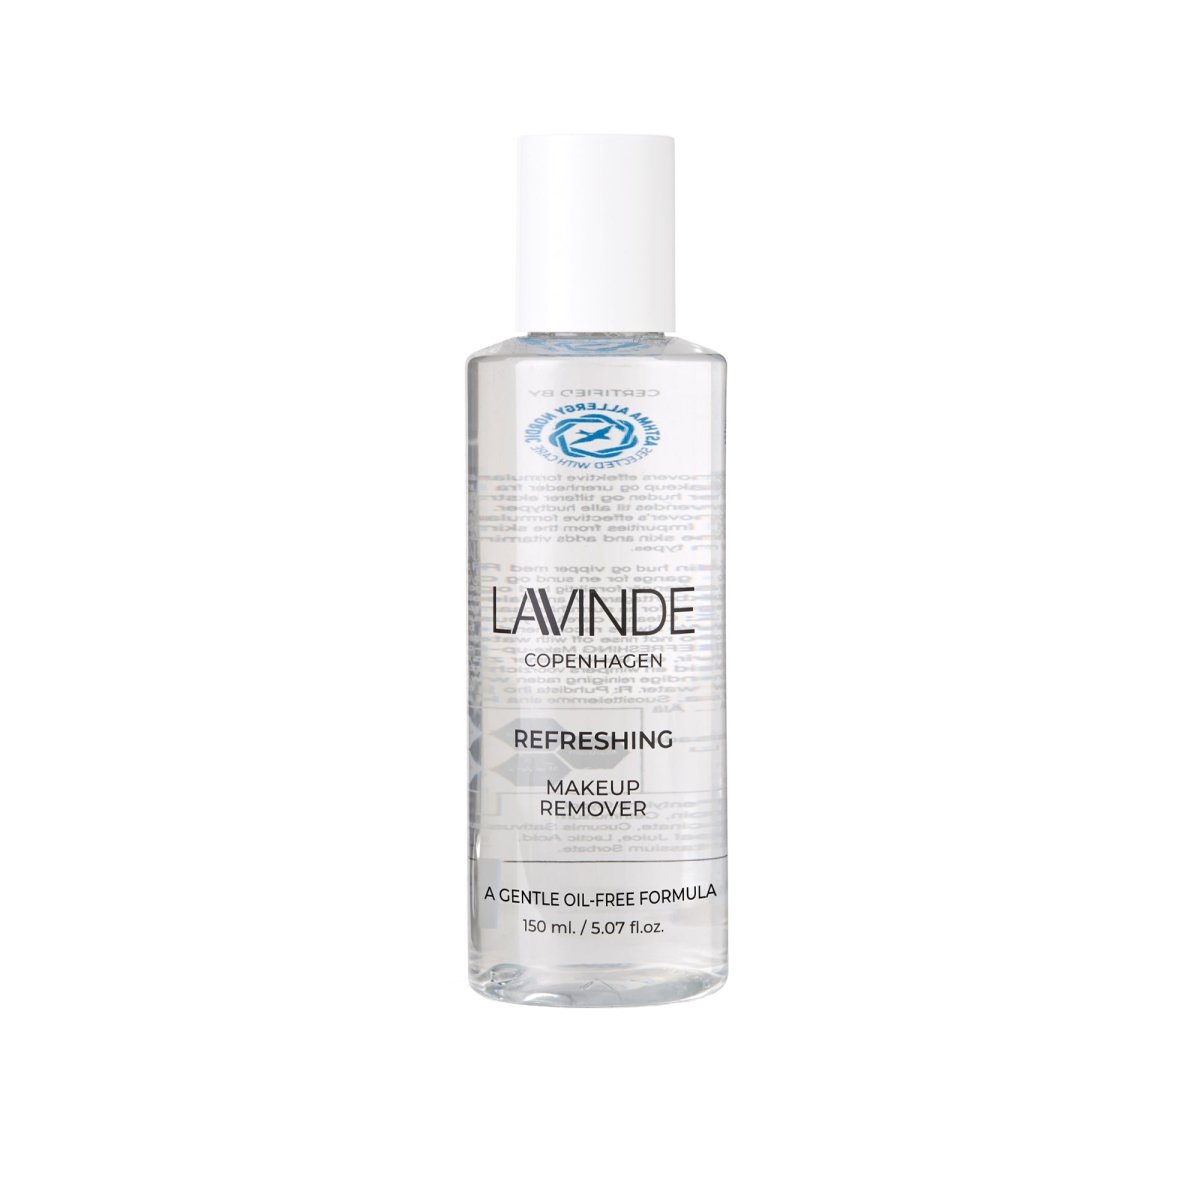 Se Lavinde Refreshing Makeup Remover, 150ml - Lavinde Copenhagen - Cosmetics - Buump hos Buump